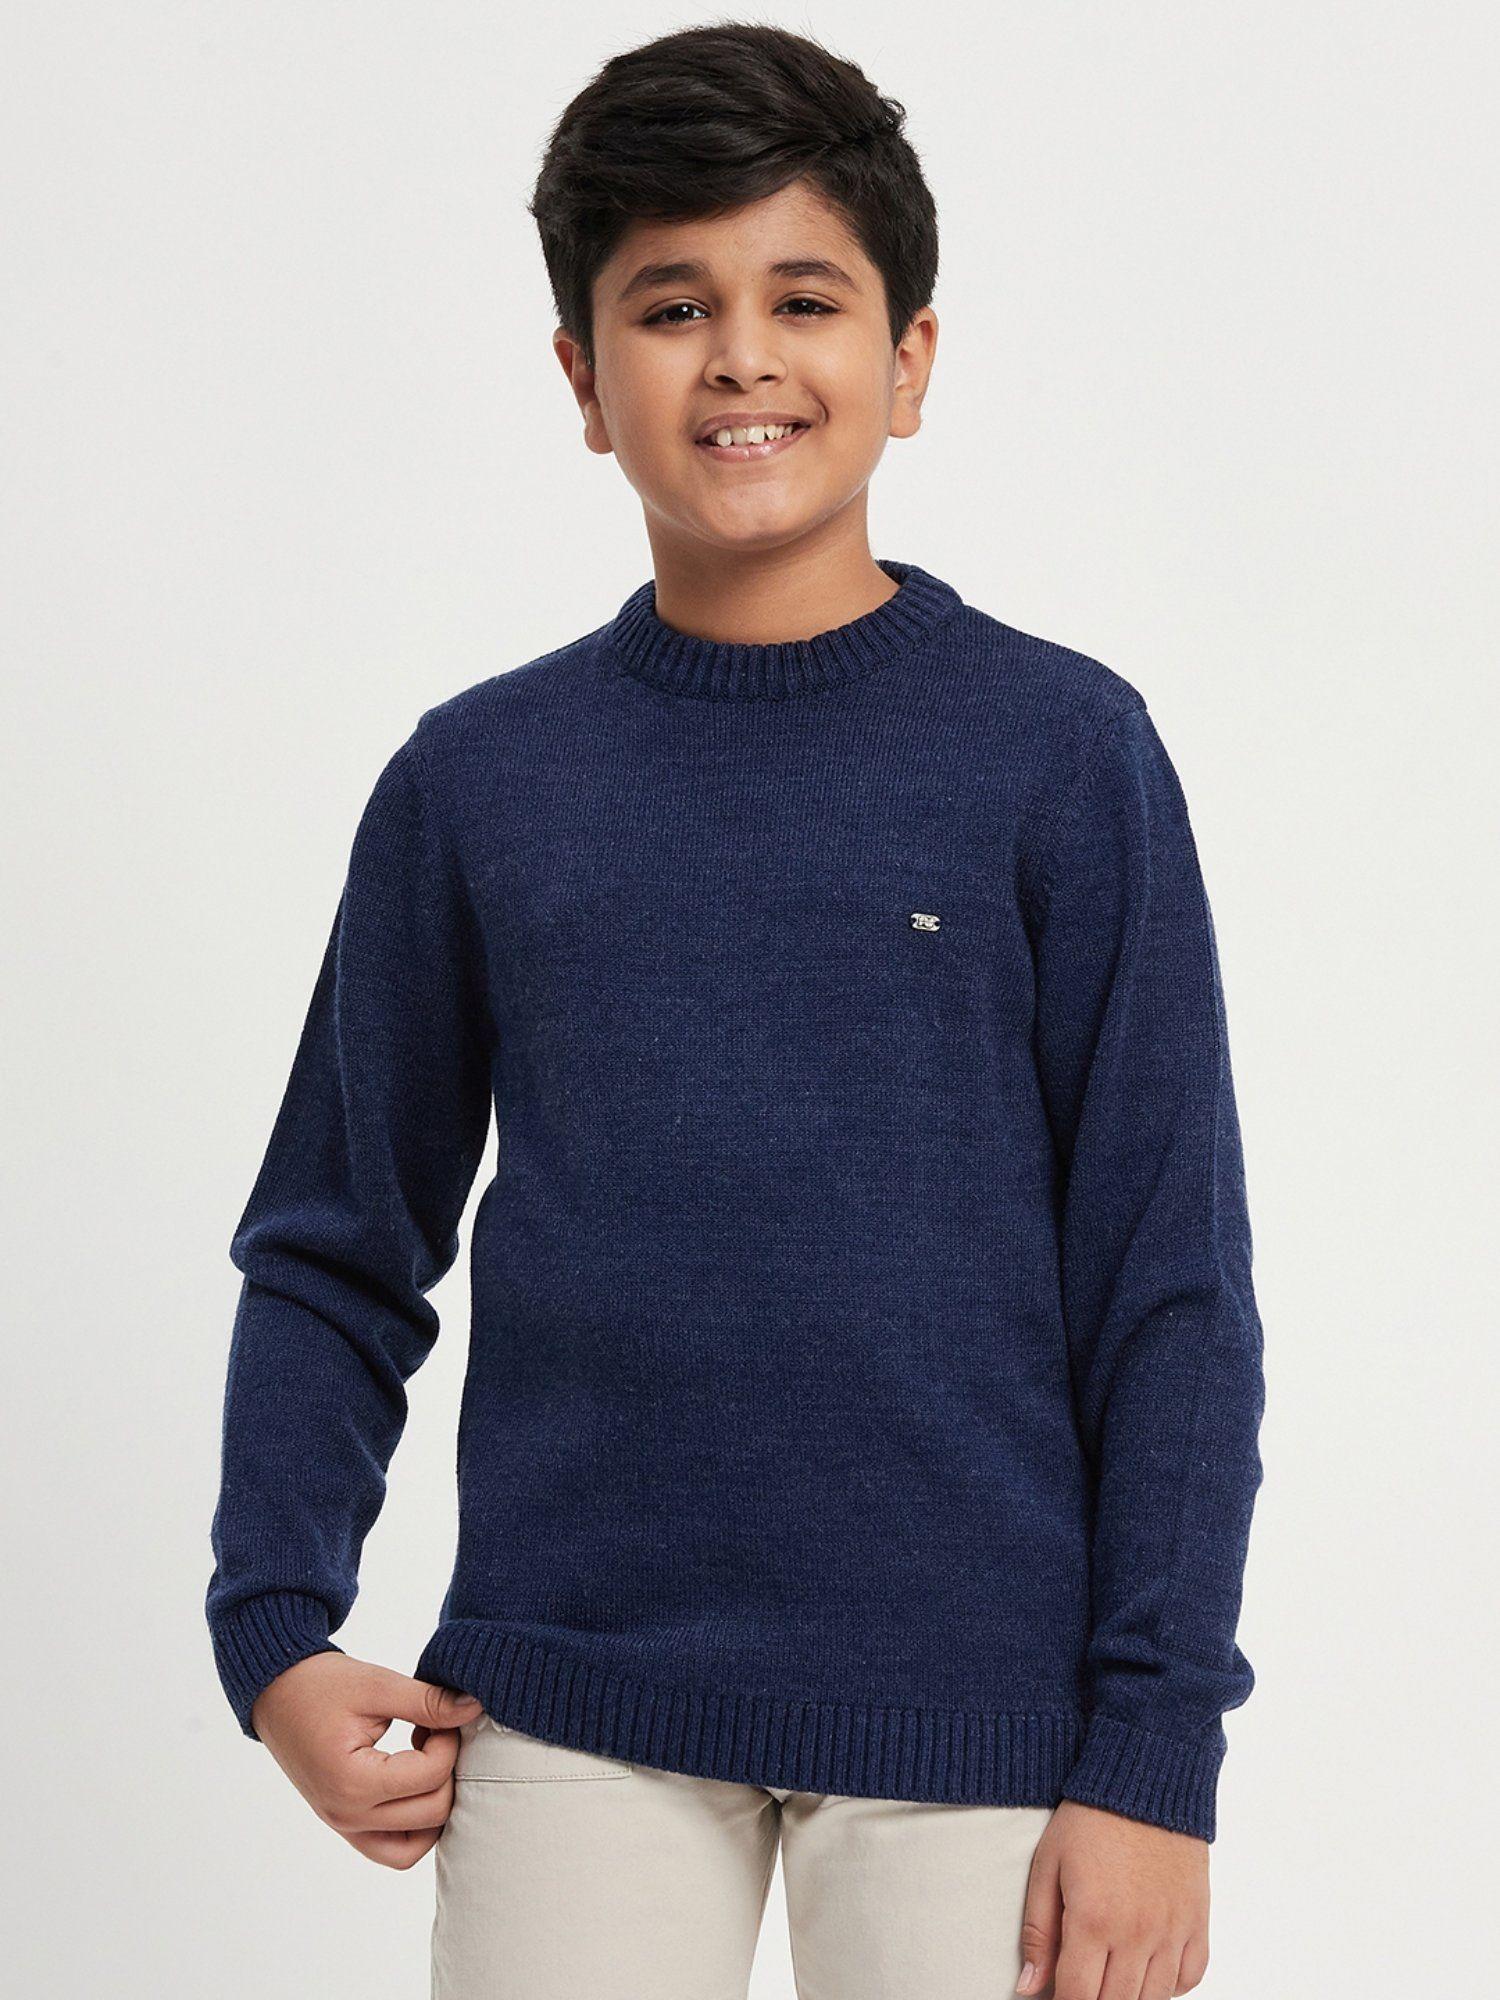 unisex-navy-blue-woven-full-sleeves-round-neck-sweater